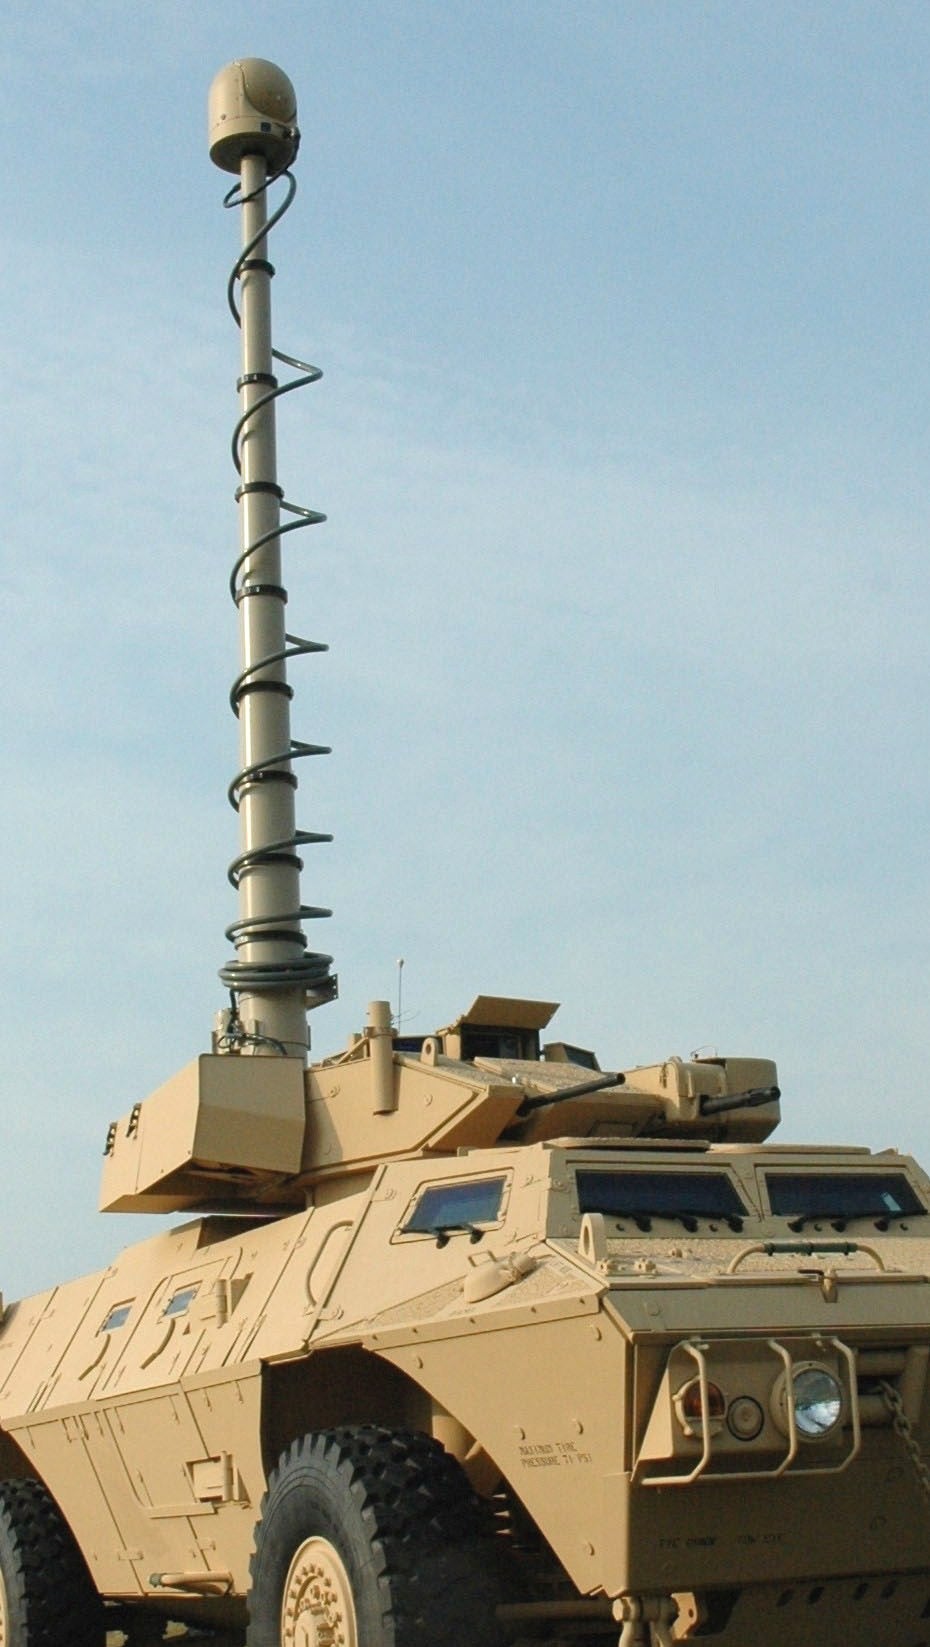 Stiletto Composite Telescoping Mast - Army Technology